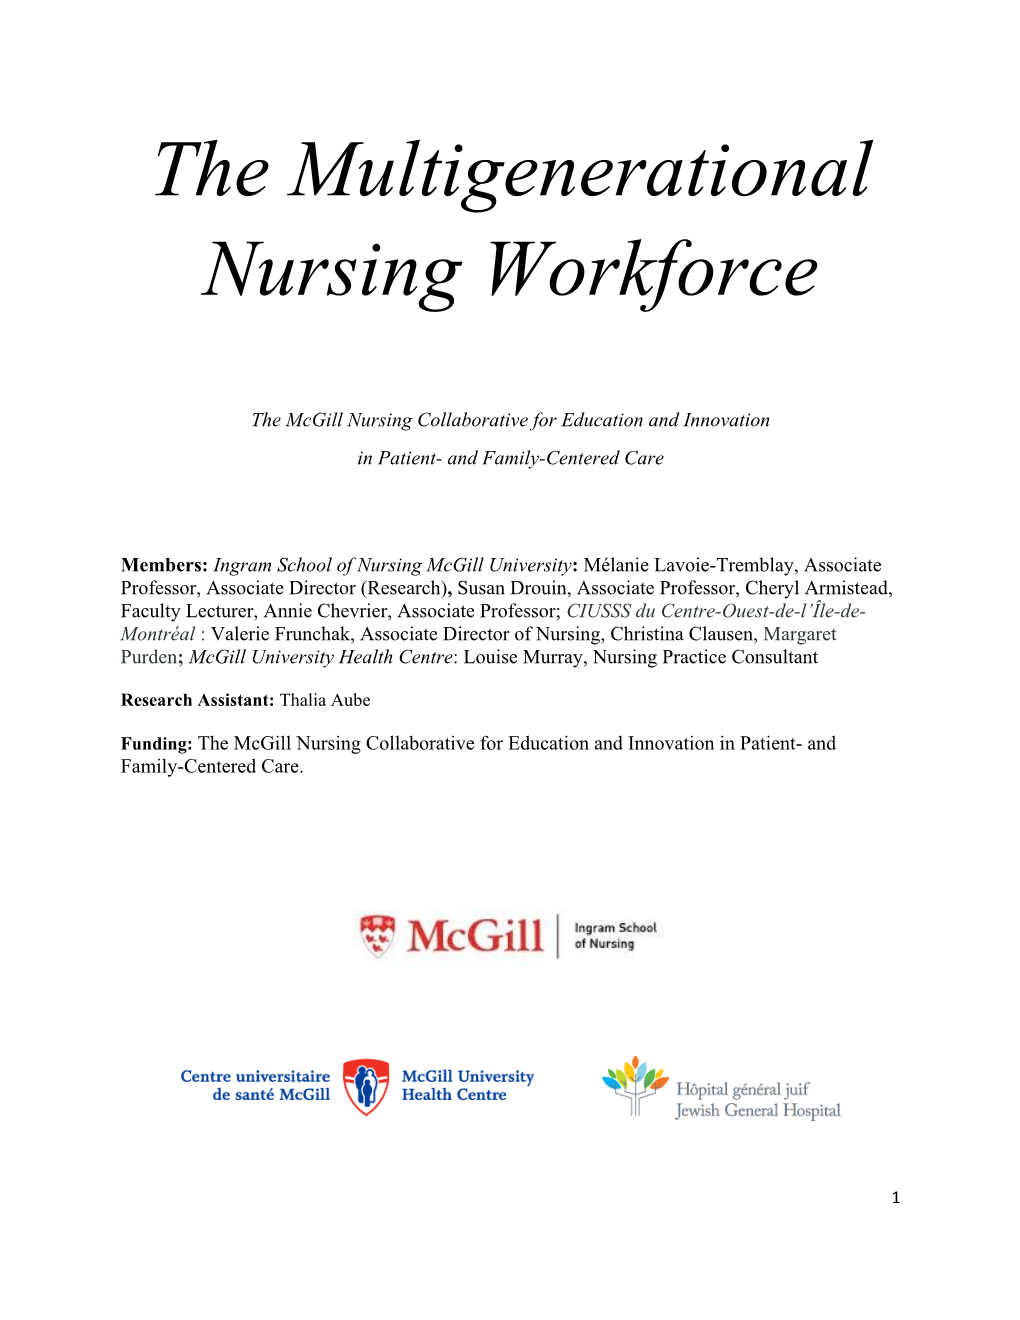 The Multigenerational Nursing Workforce